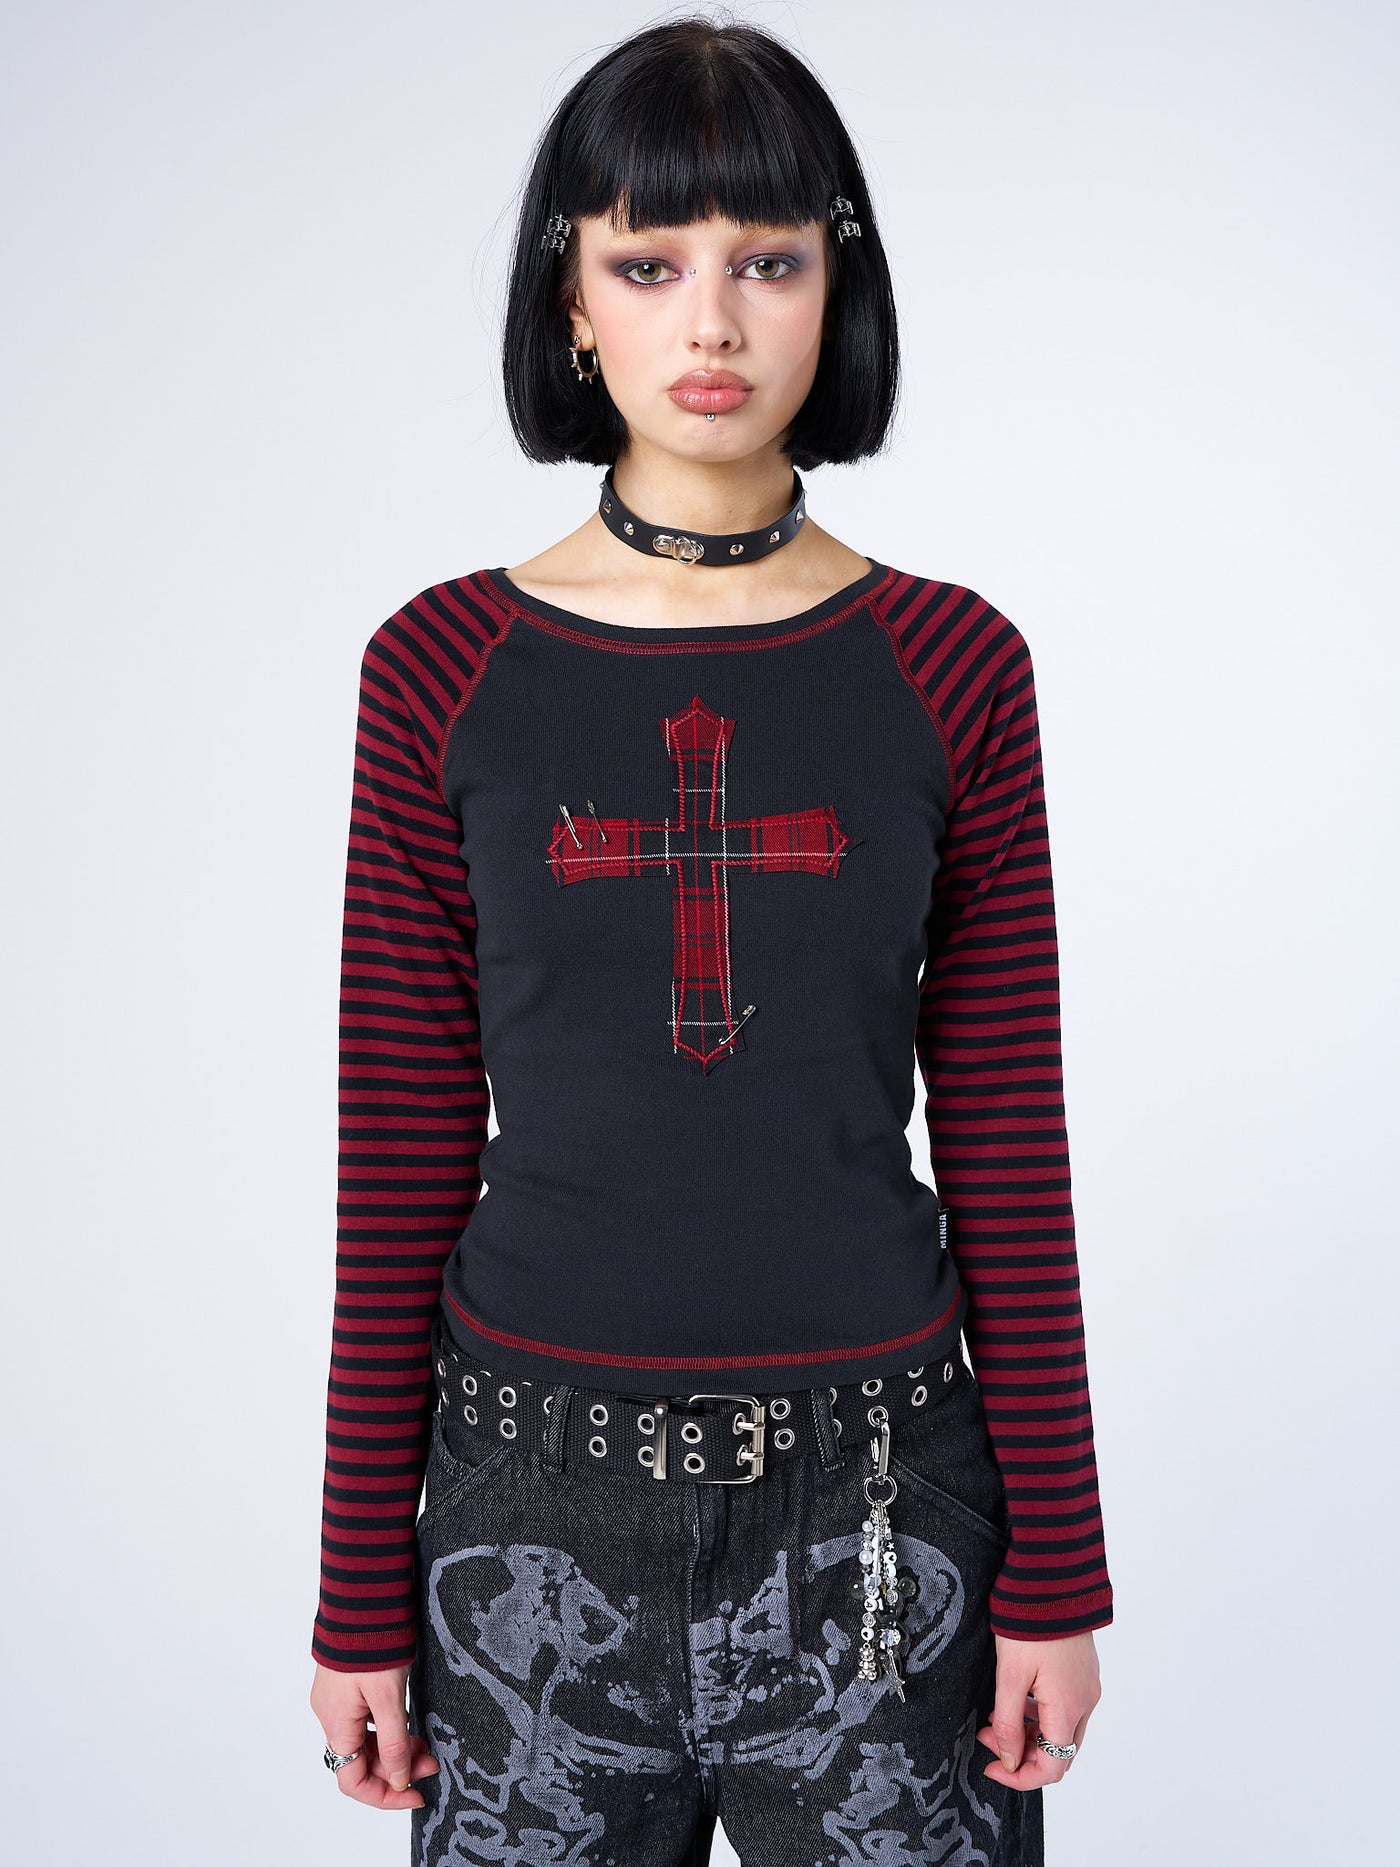 Black Raglan Long Sleeve Top with Red Striped Sleeves & Plaid Cross ...